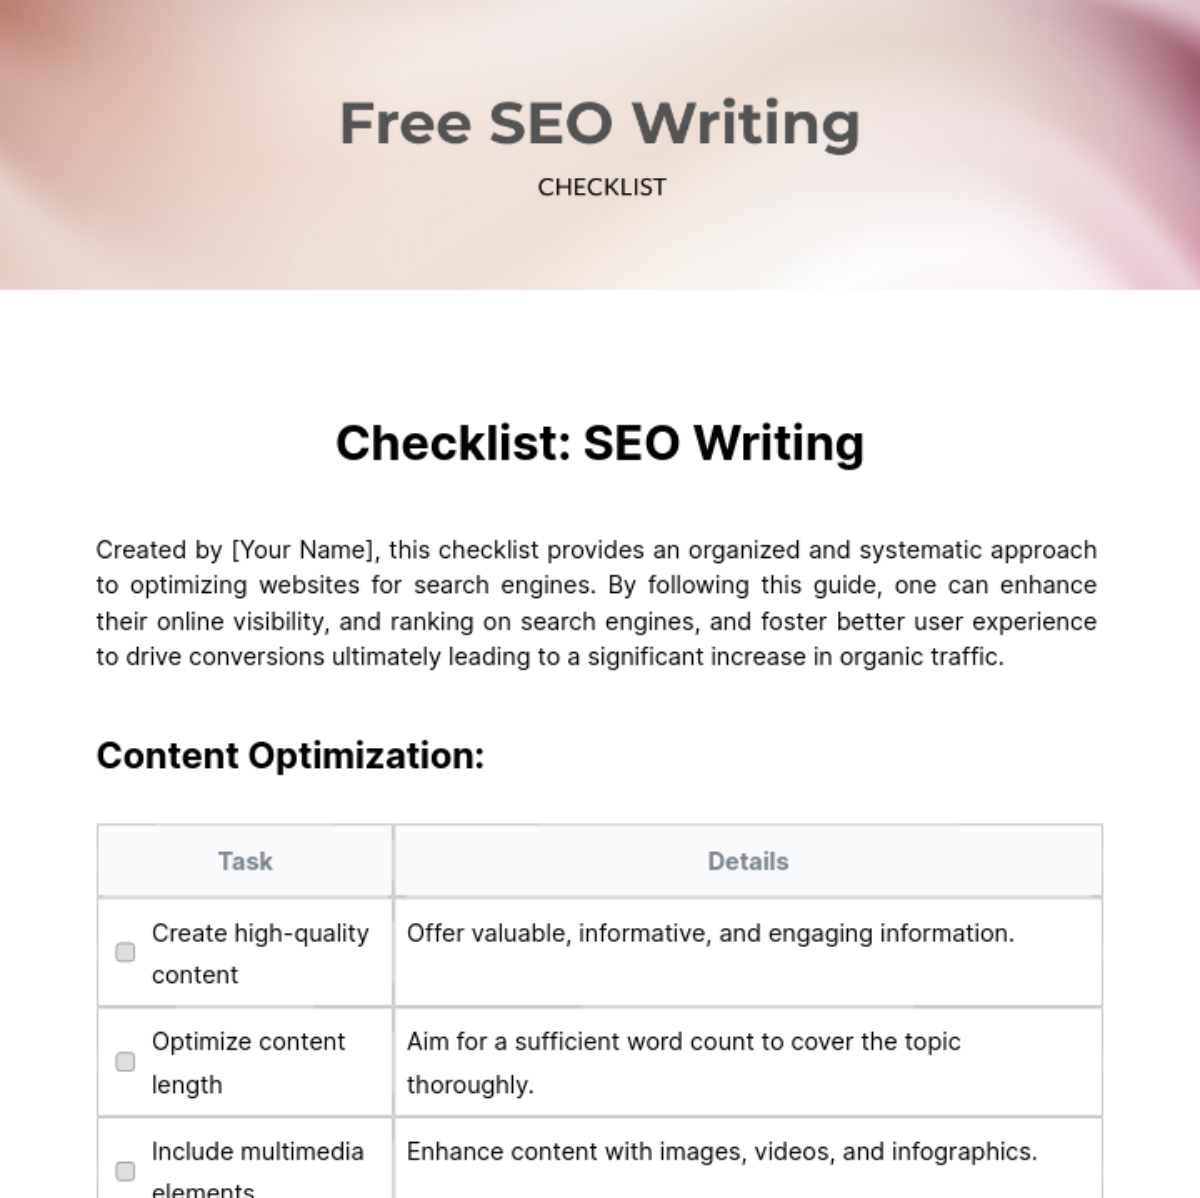 SEO Writing Checklist Template